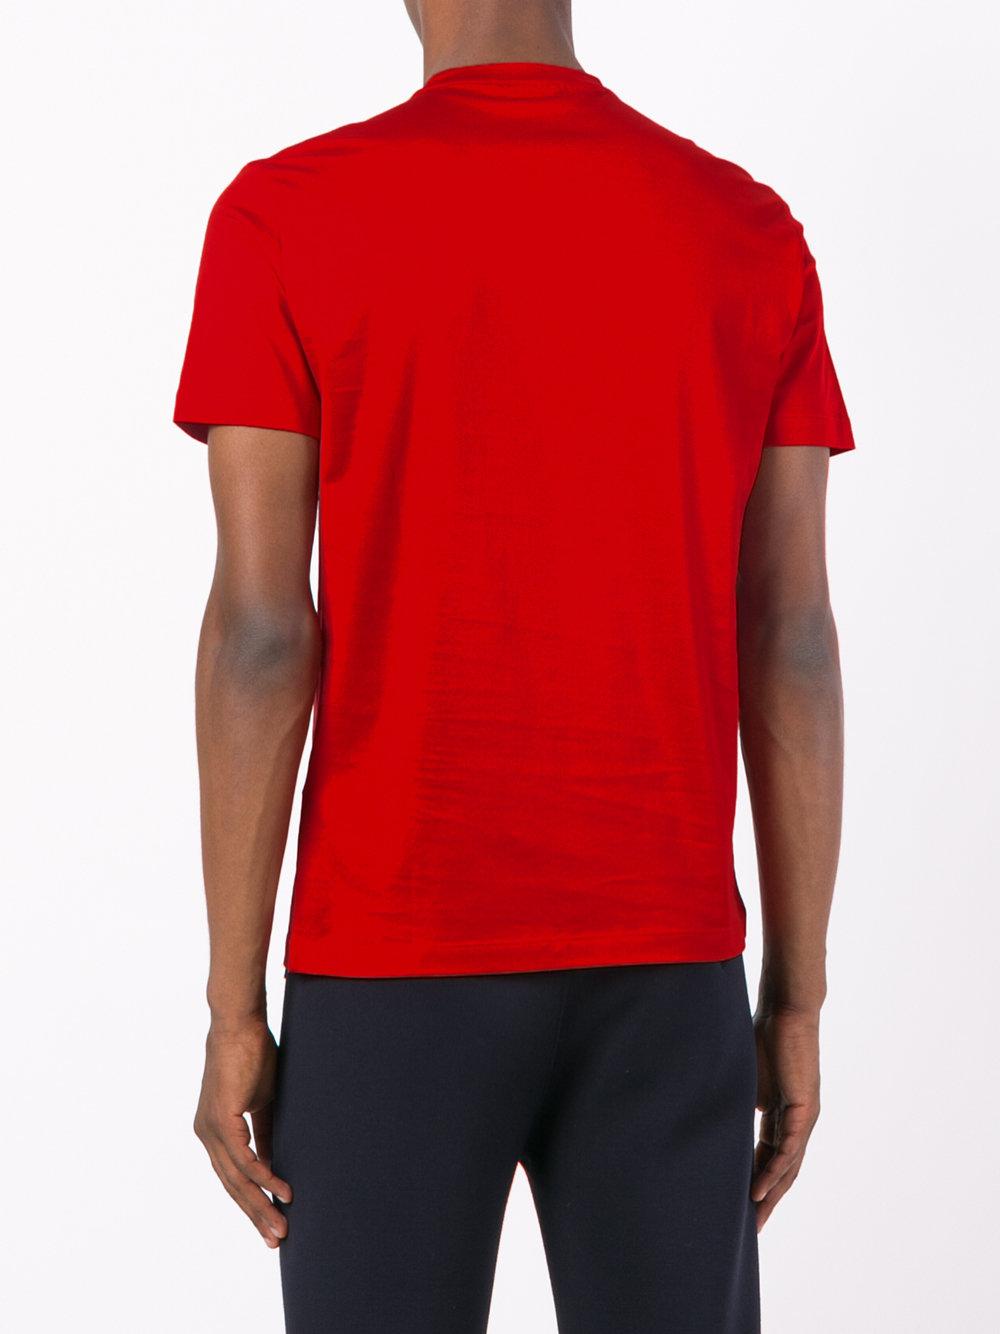 Versace Leather Medusa Head Swarovski T-shirt in Red for Men - Lyst